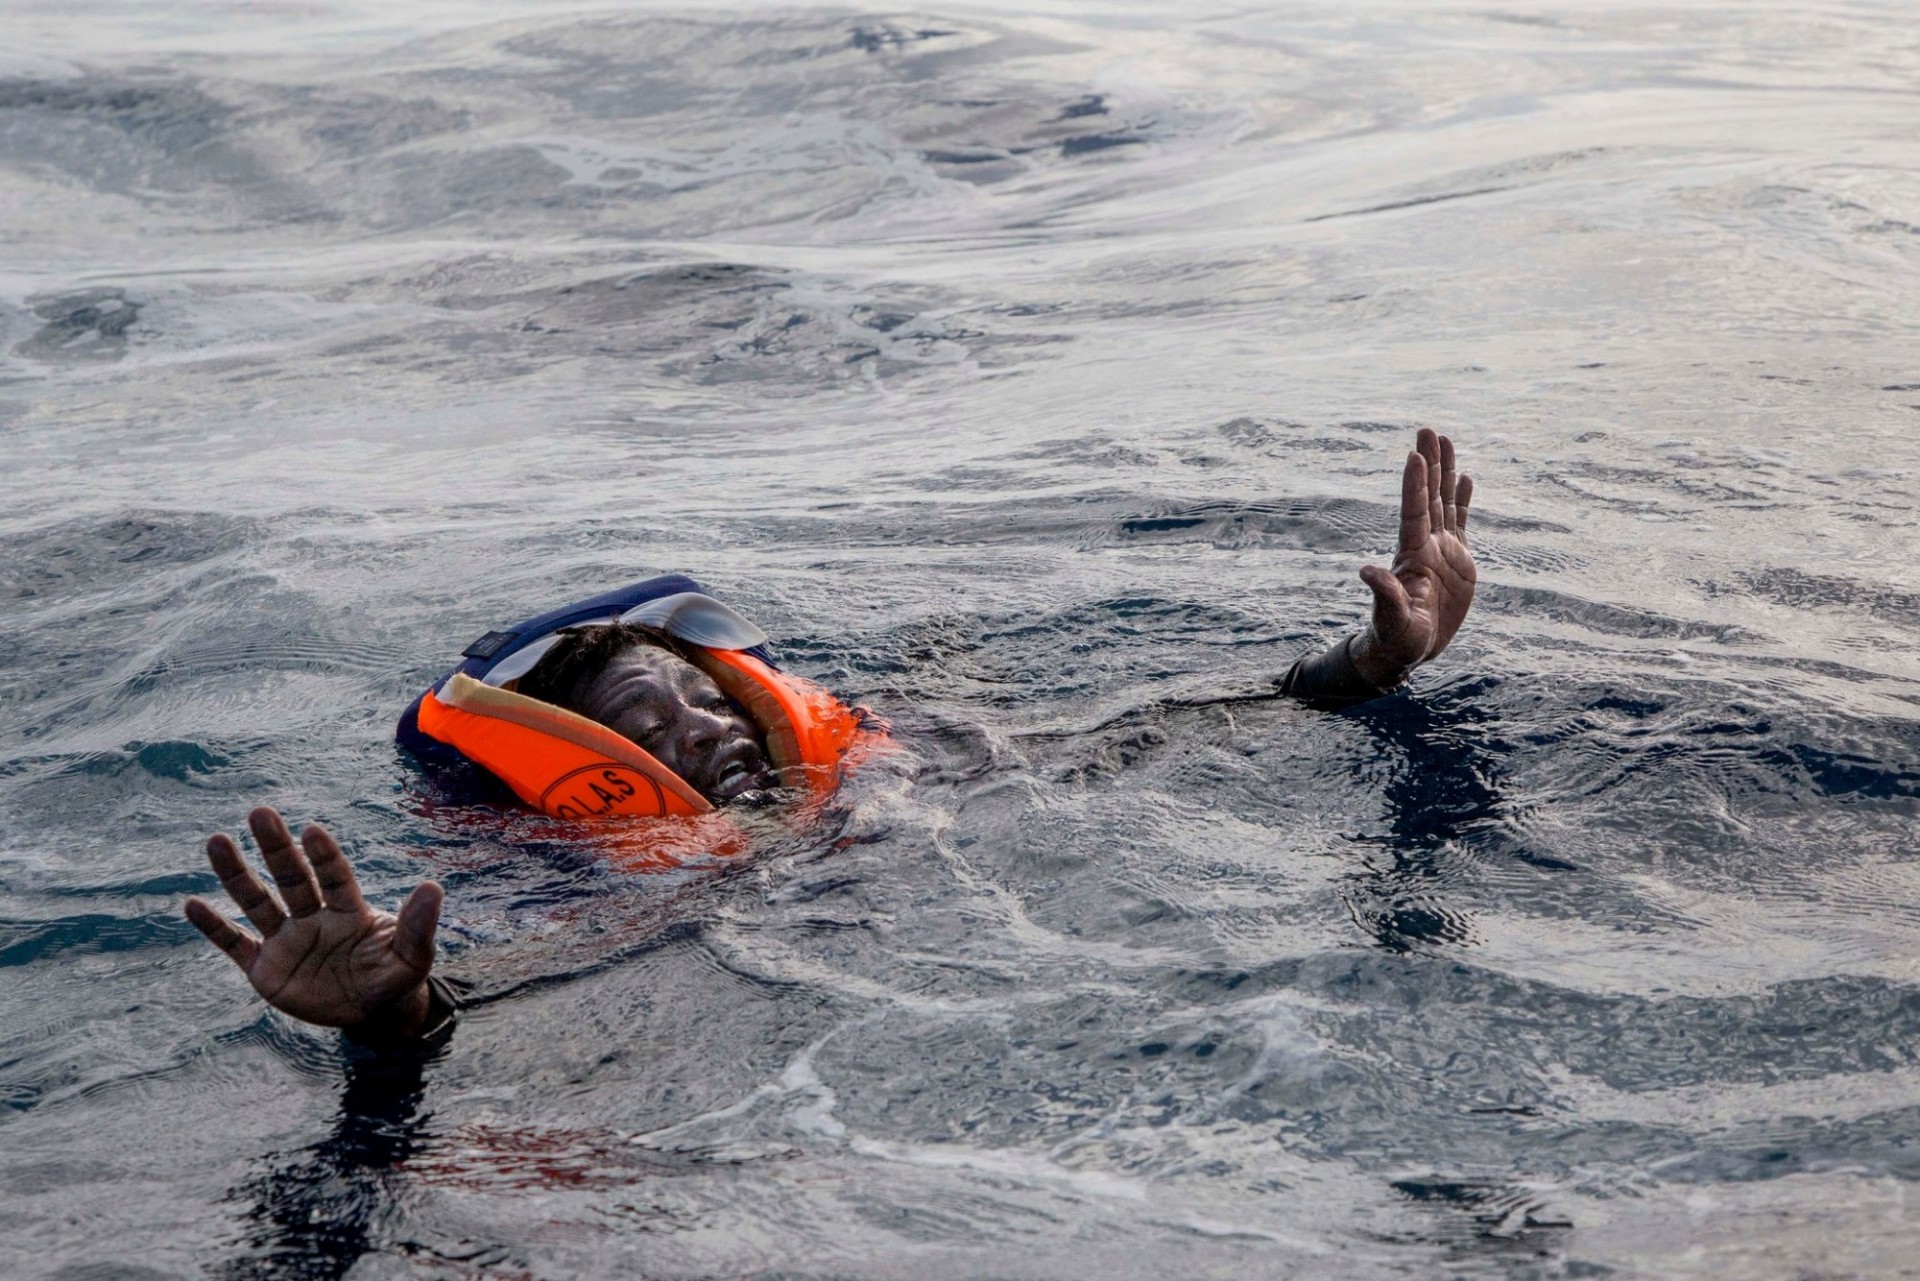 shipwrecked migrant in the Mediterranean